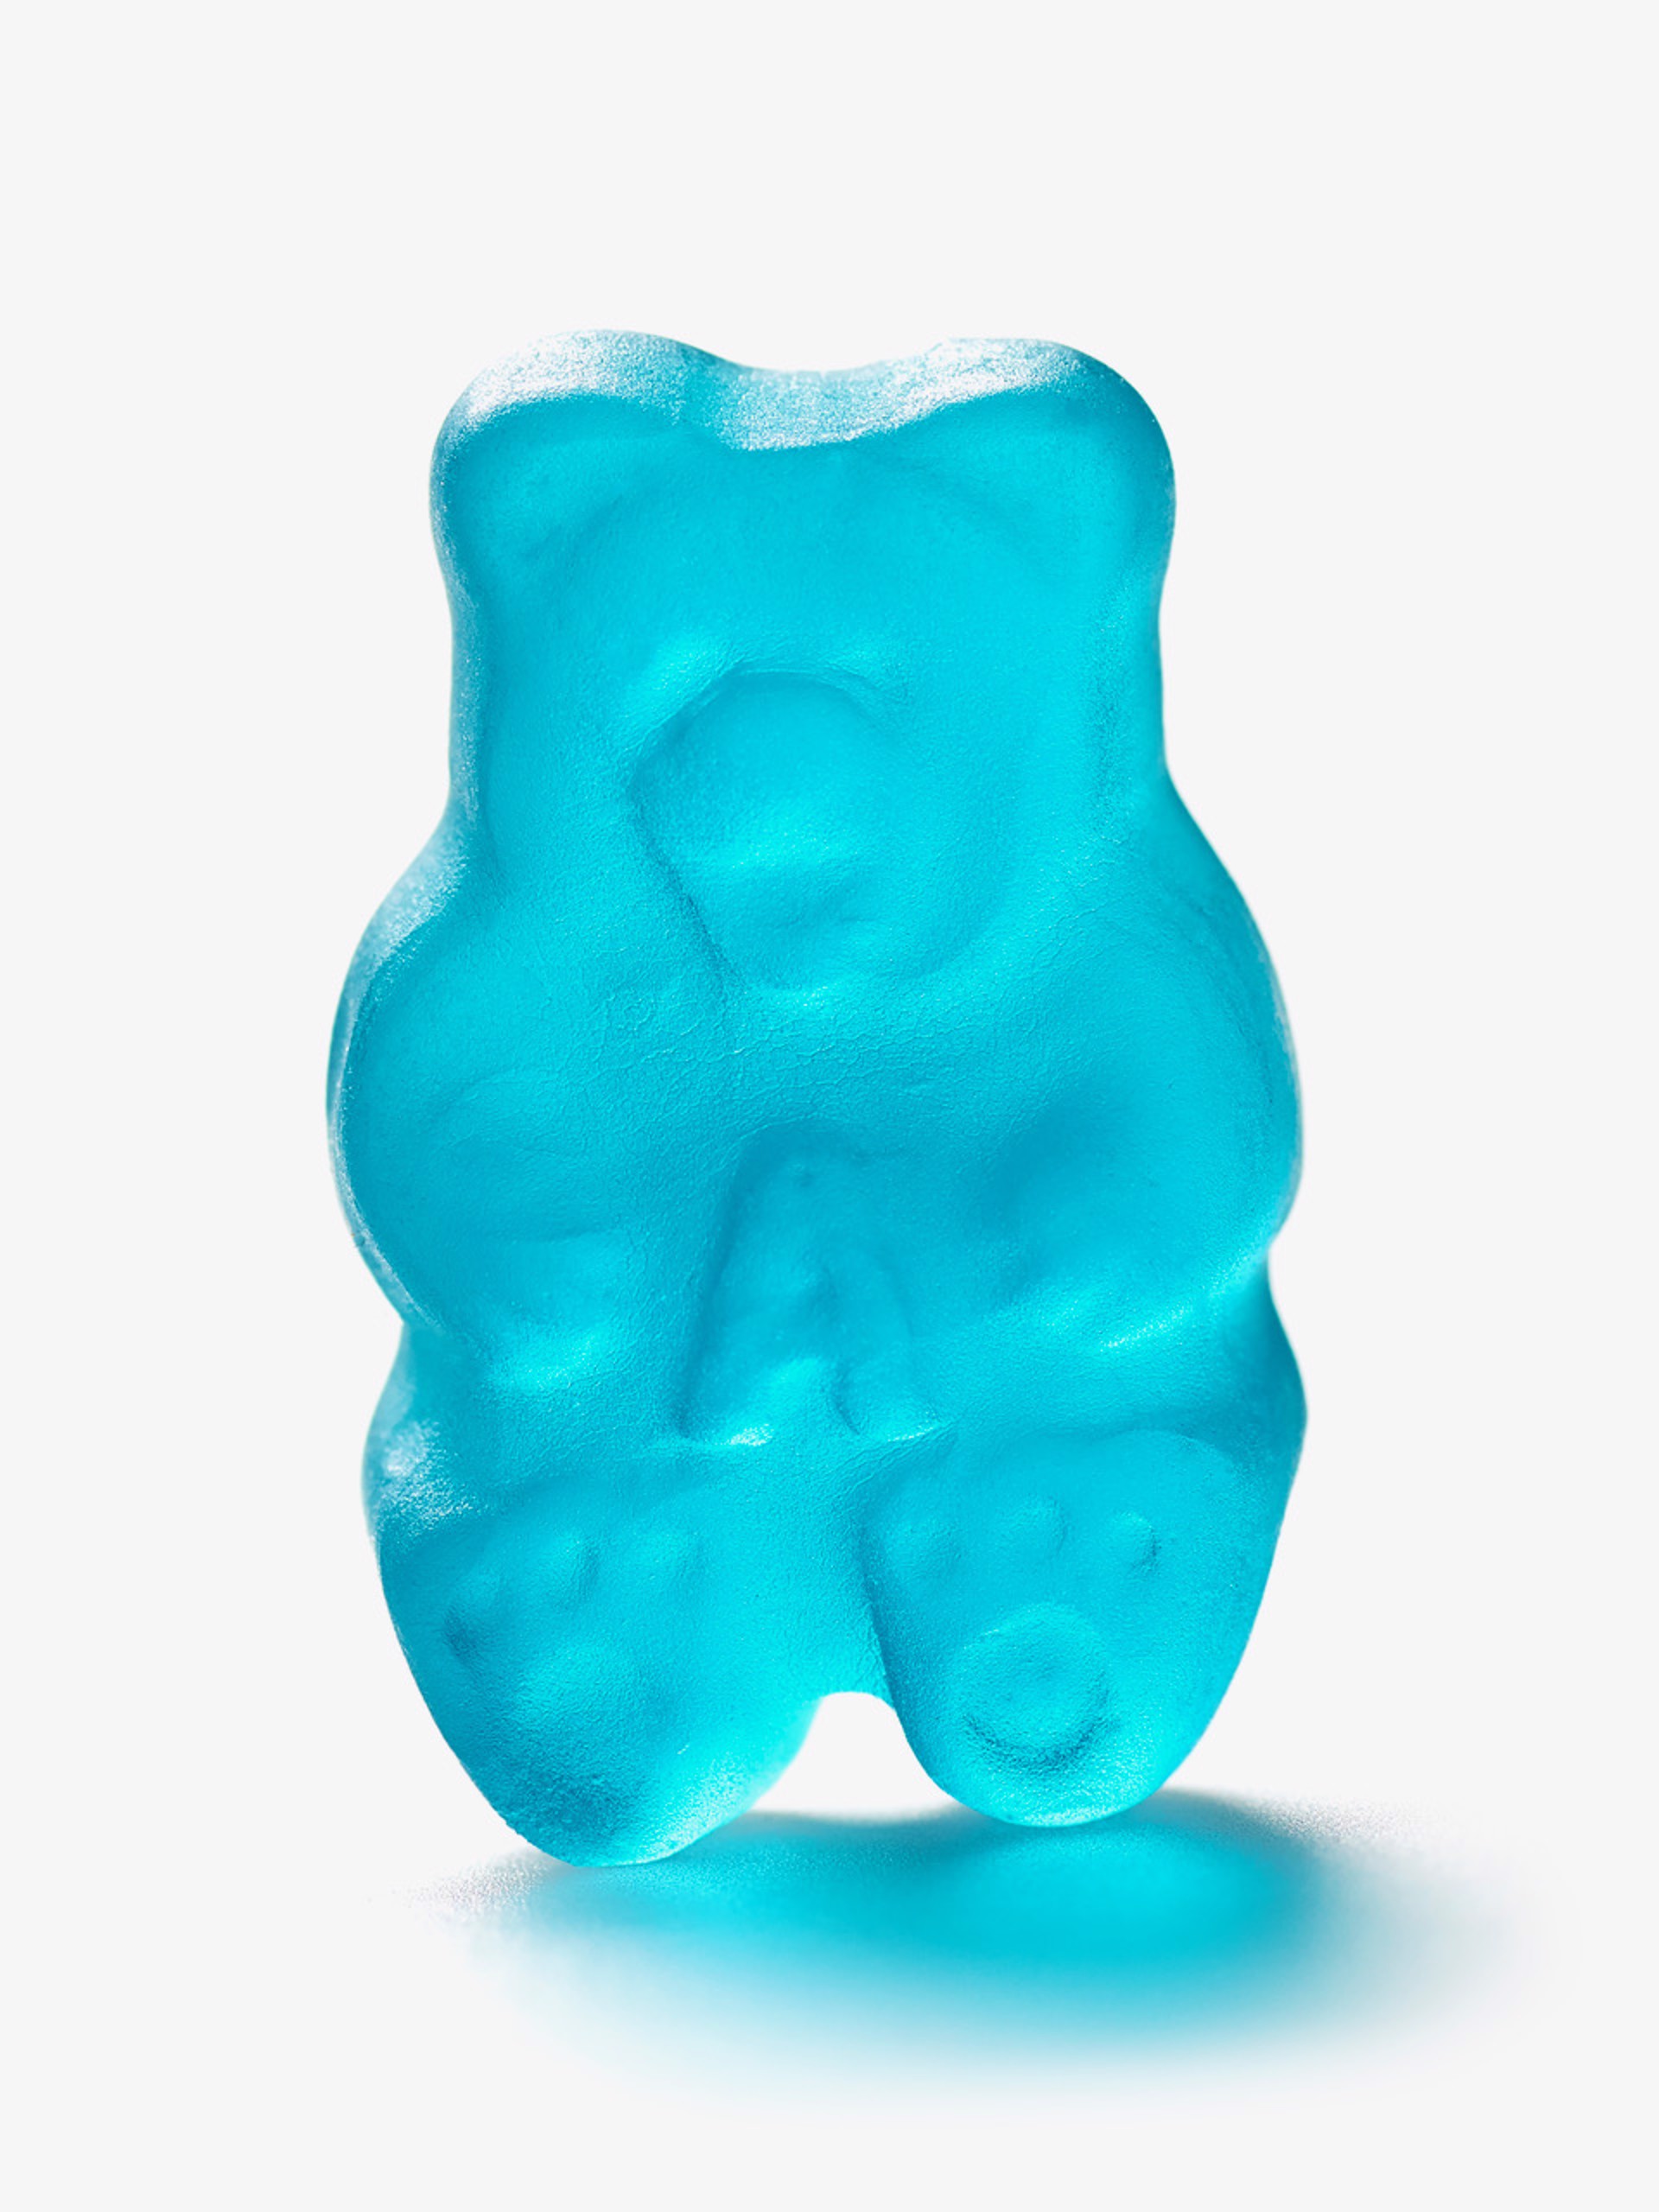 Gummy Bear - Blue by Peter Andrew Lusztyk / Refined Sugar